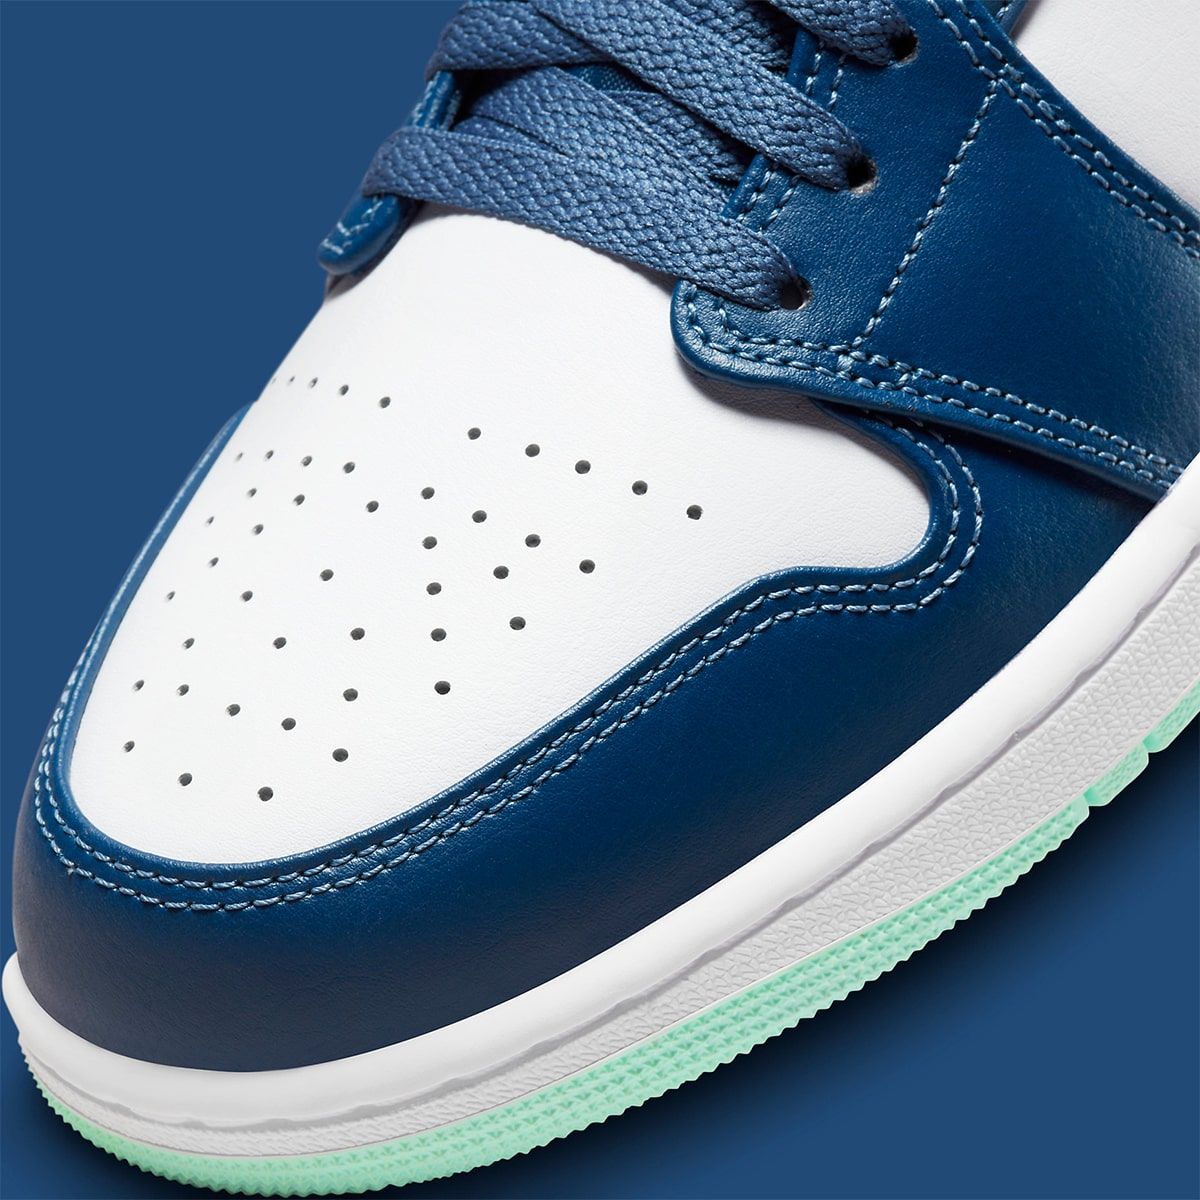 Where to Buy the Air Jordan 1 Mid “Blue Mint”